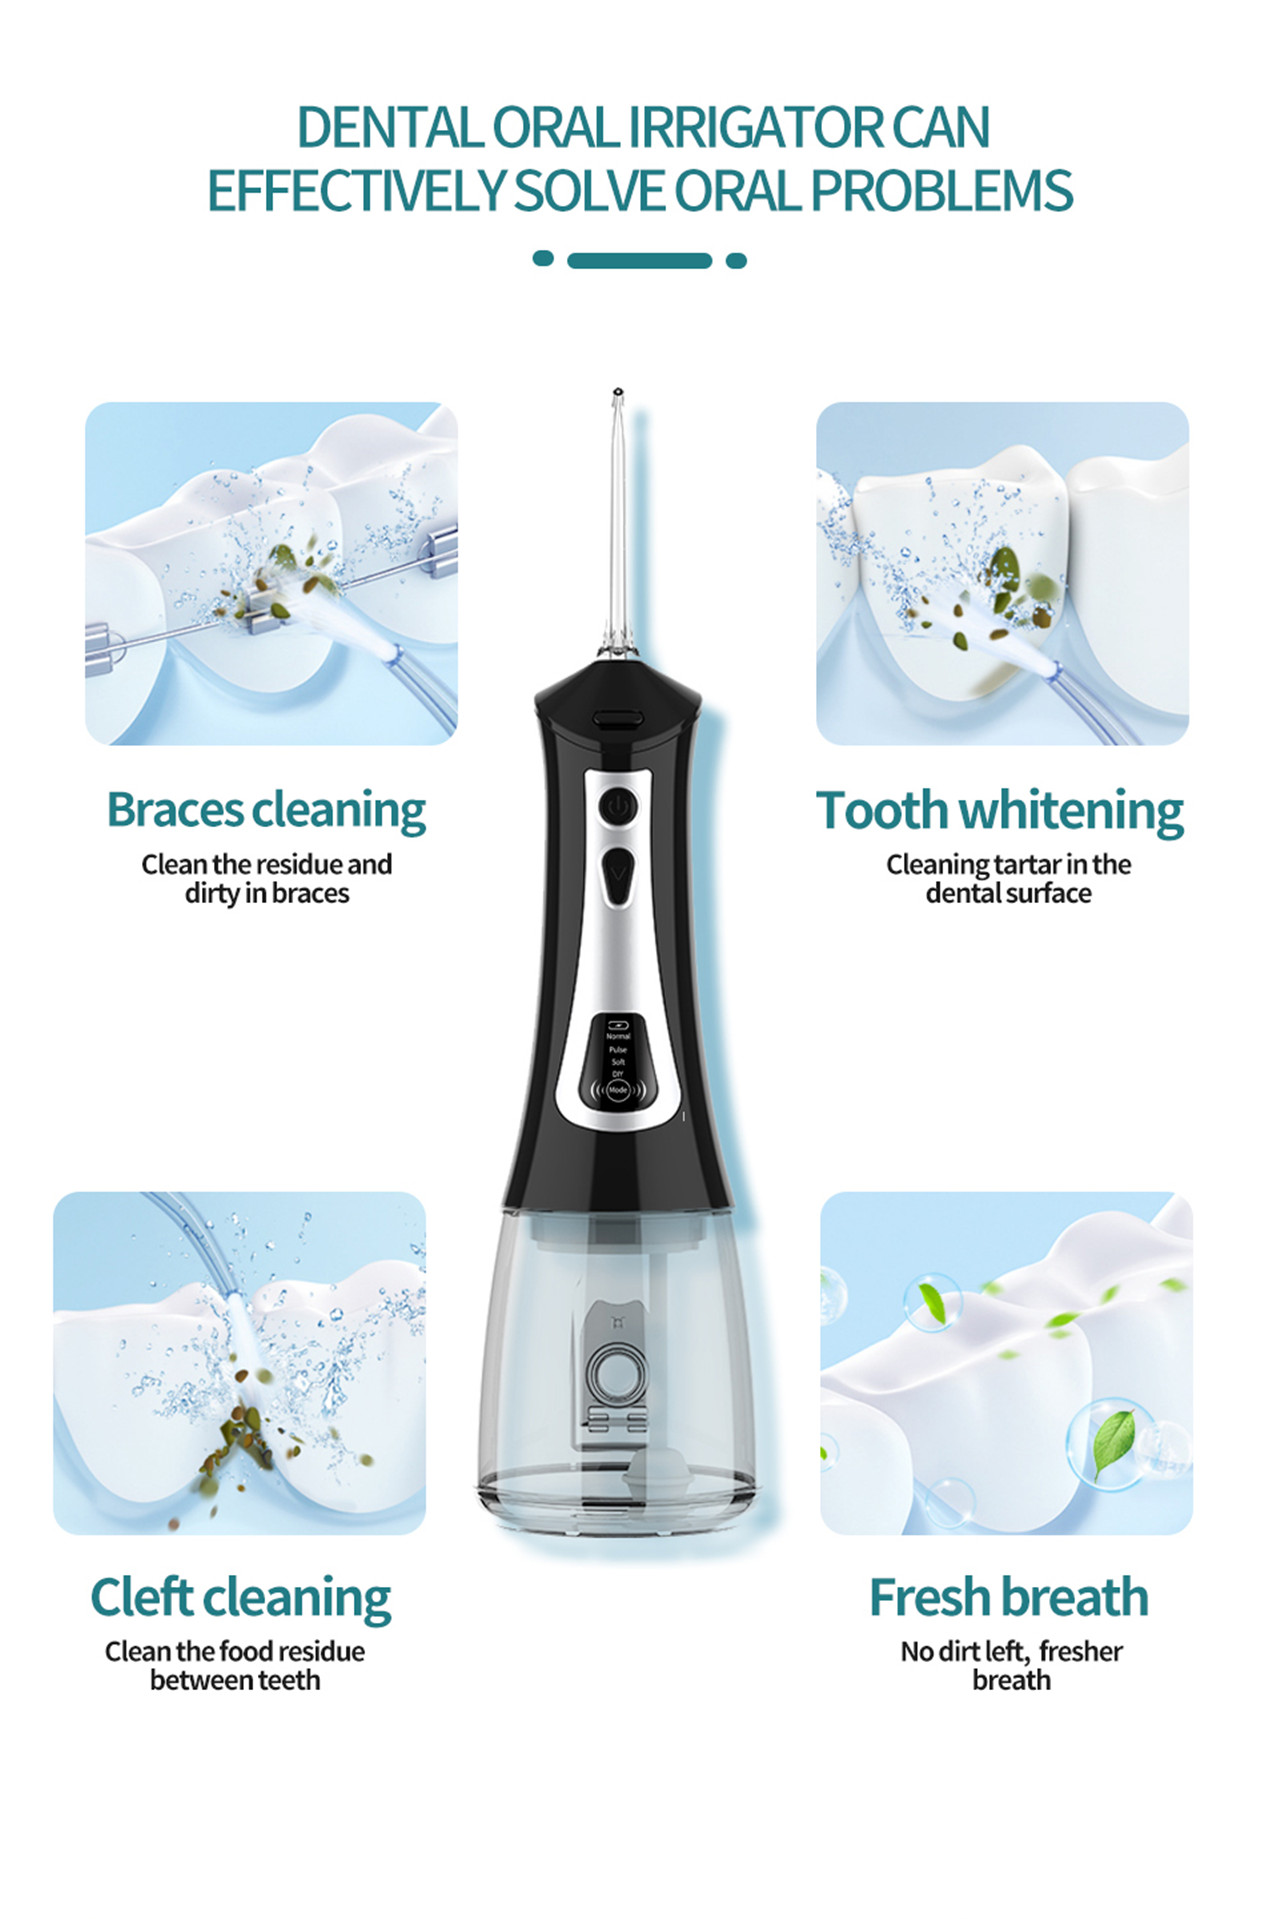 Flosser de agua omedic con pantalla LCD para spa oral limpio dental (9)